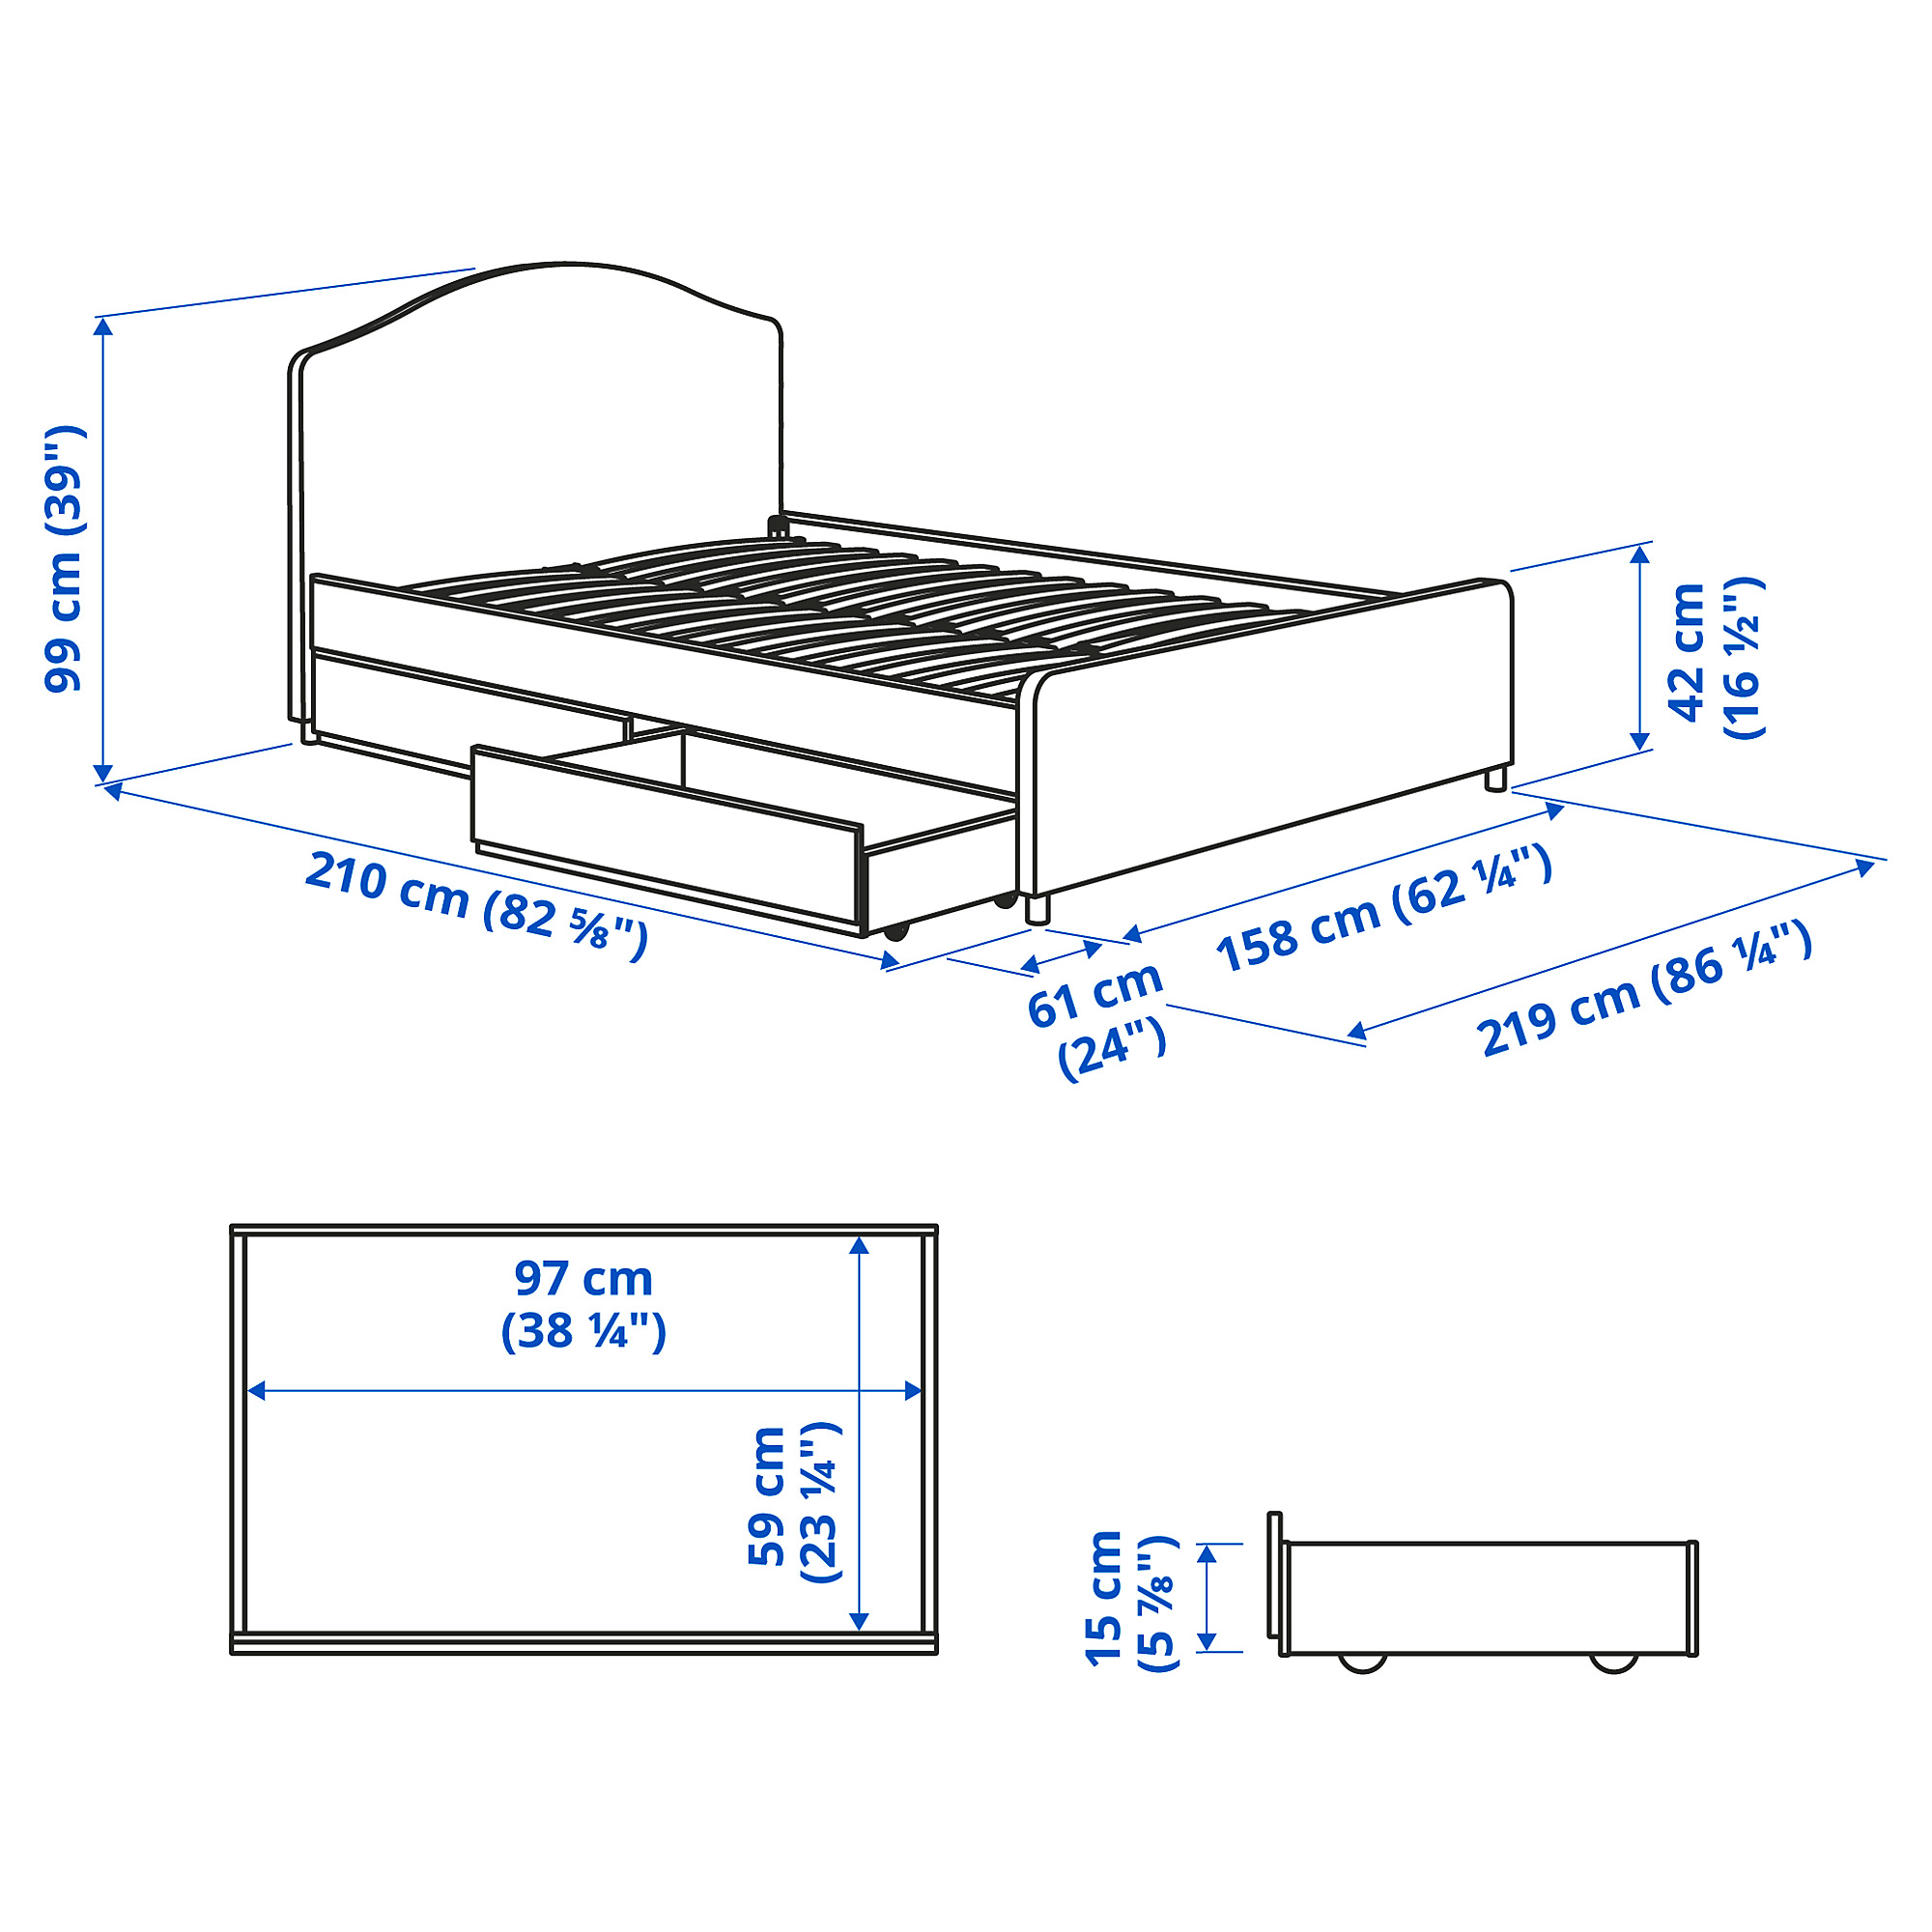 HAUGA upholstered bed, 2 storage boxes